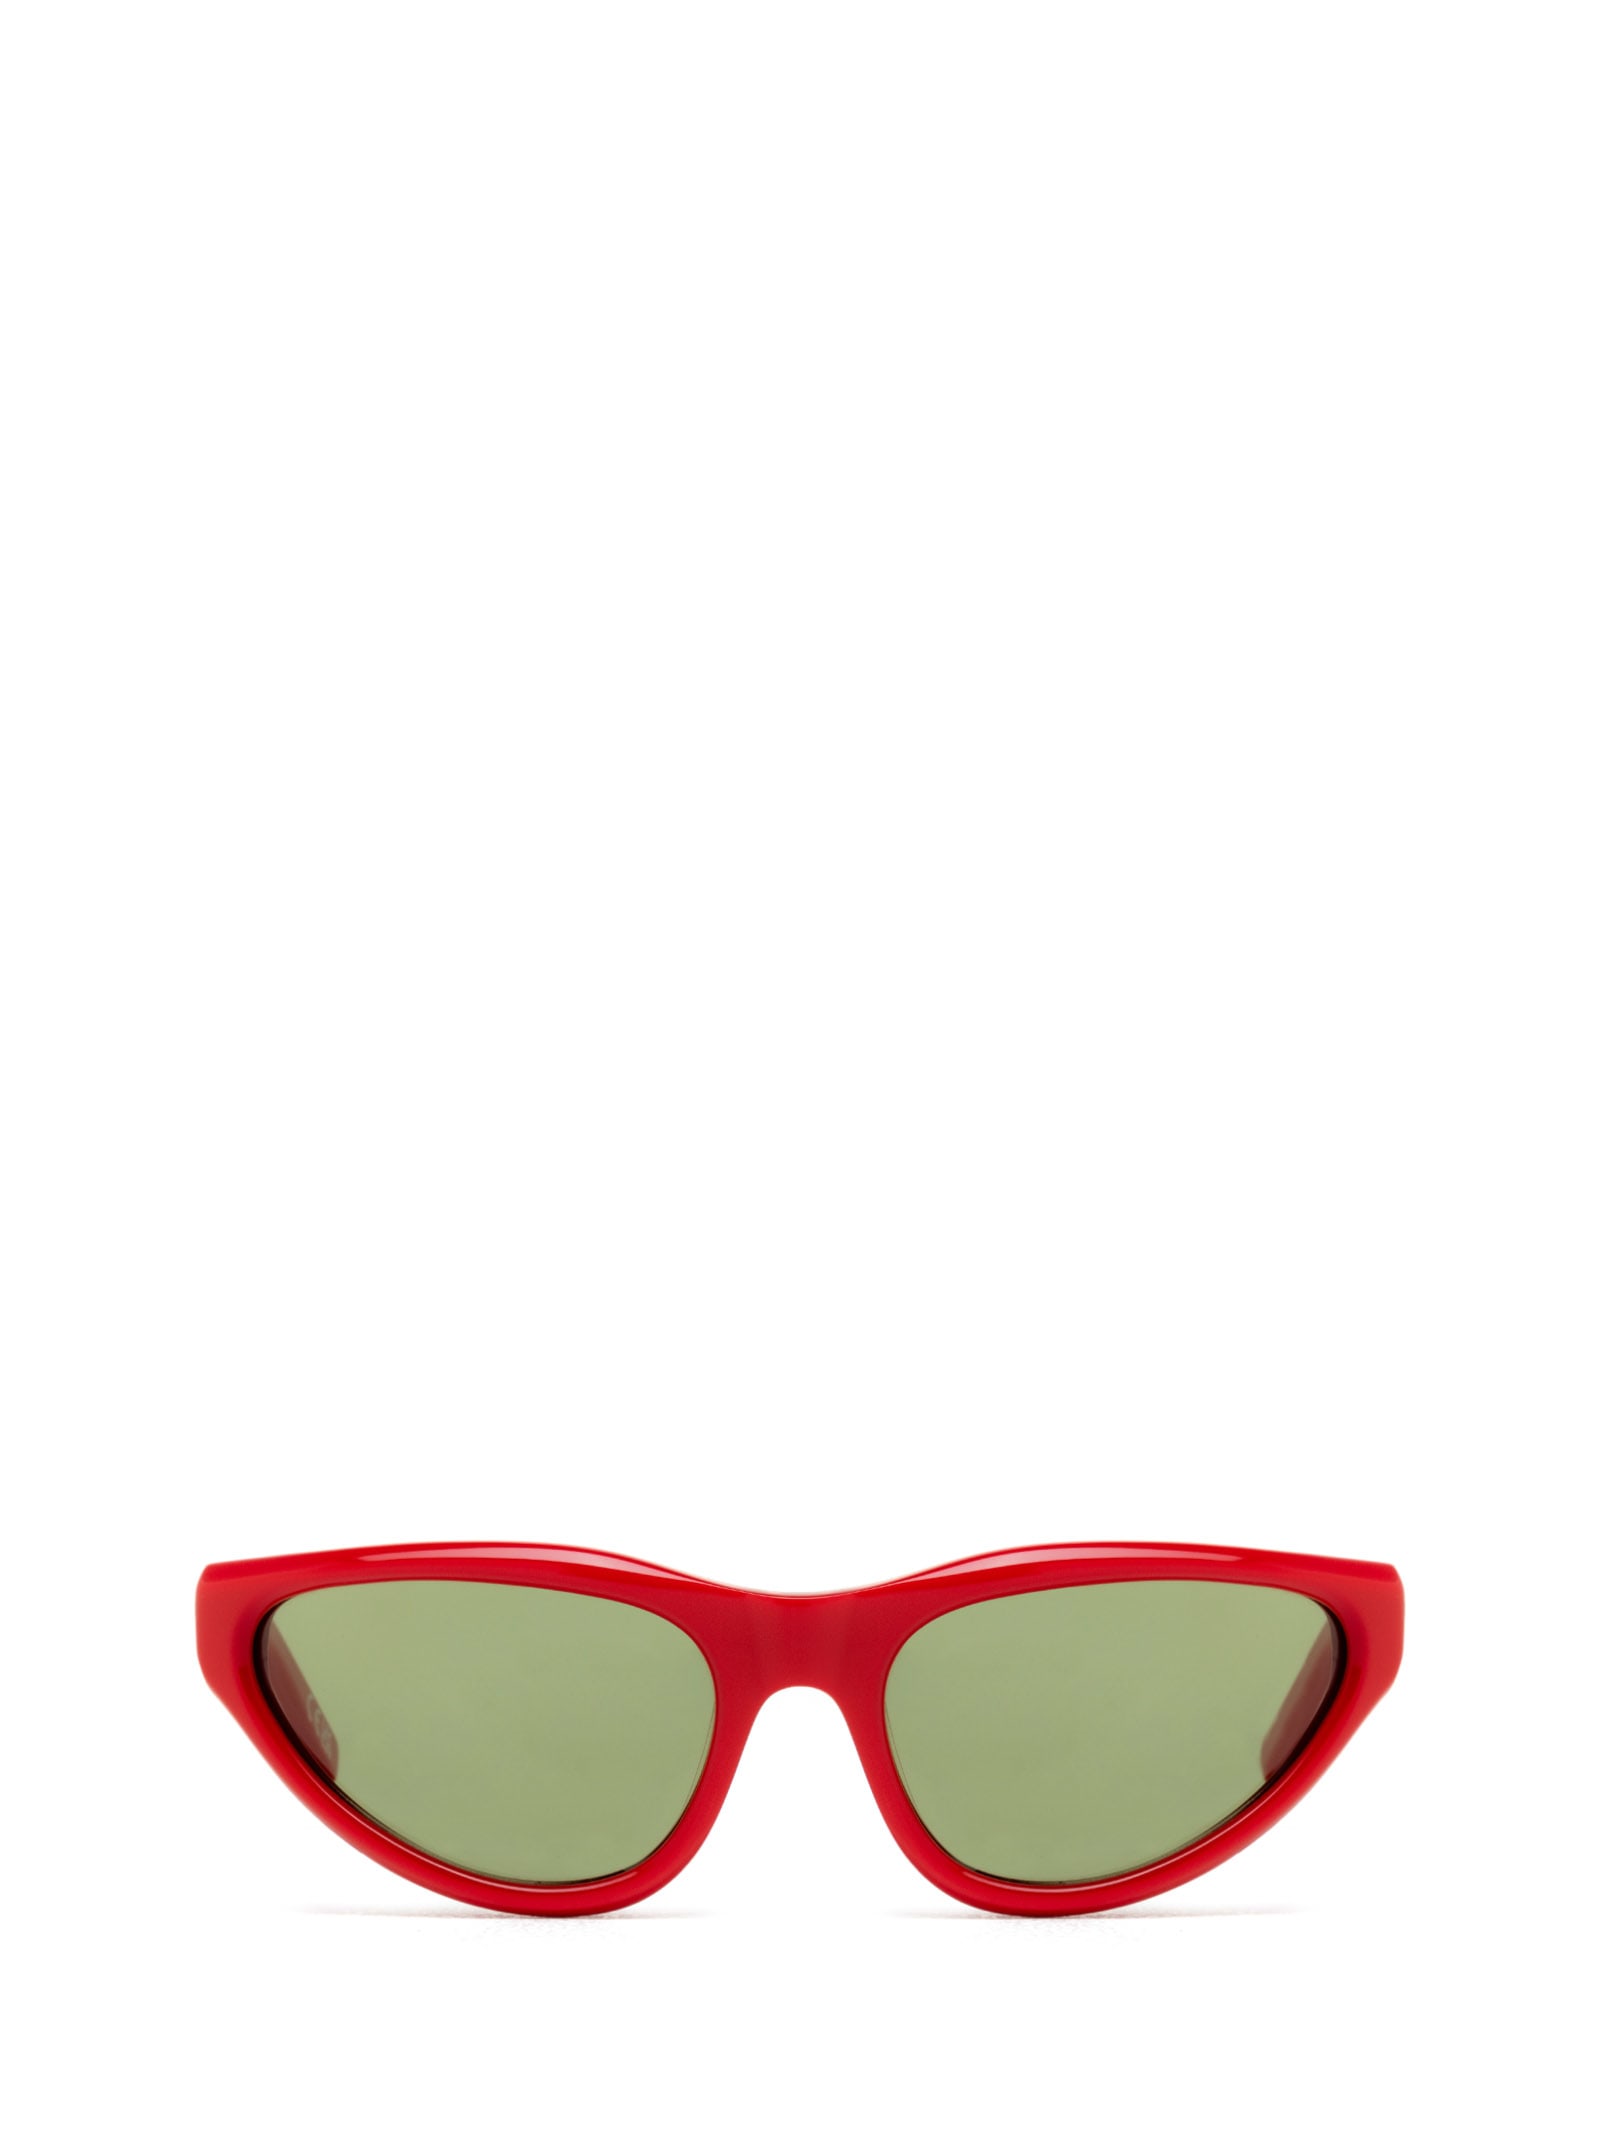 Mavericks Solid Red Sunglasses